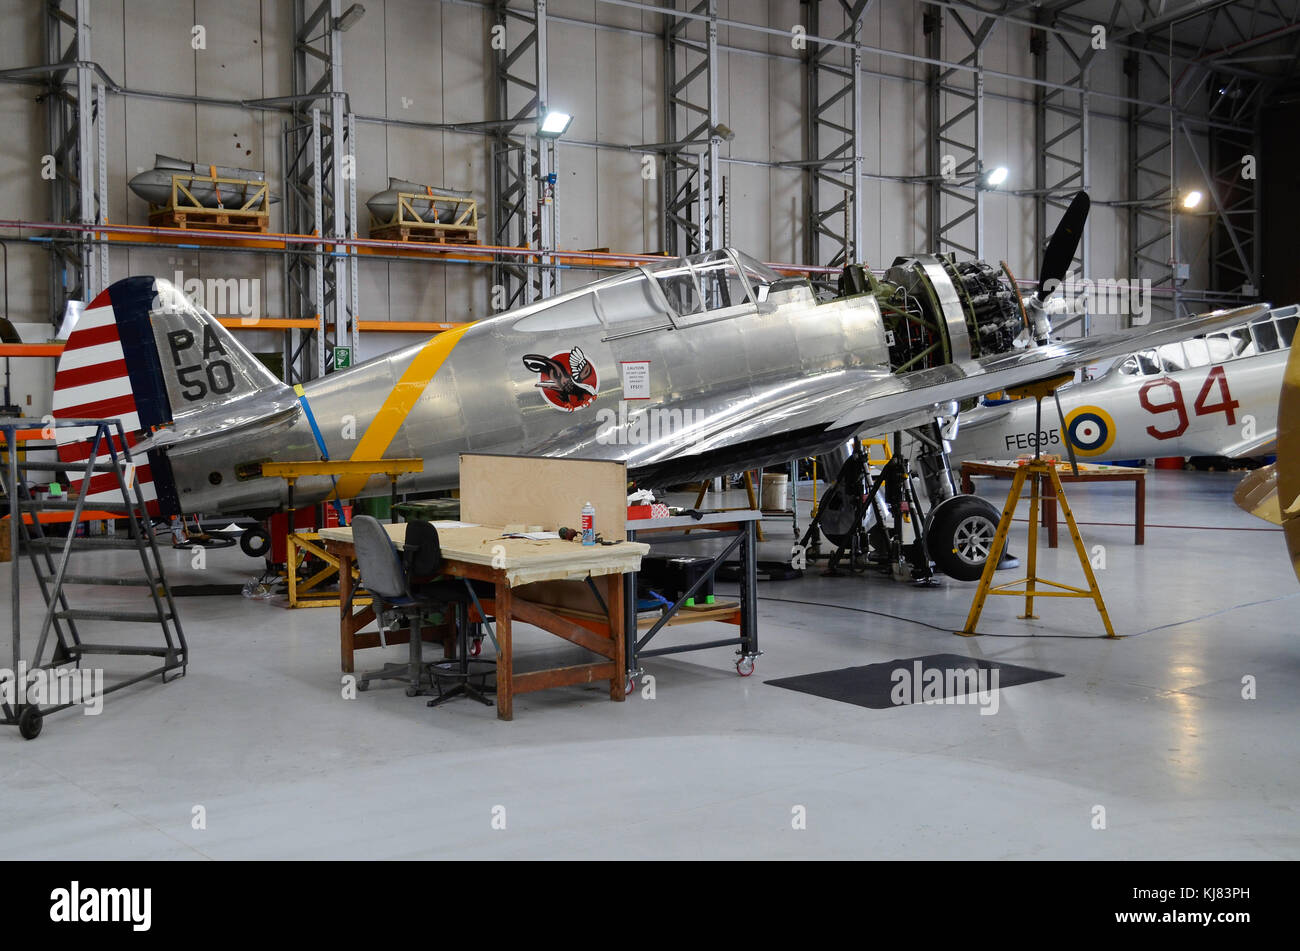 Curtiss P-36 Hawk, USAAF markings, Duxford, UK. Stock Photo